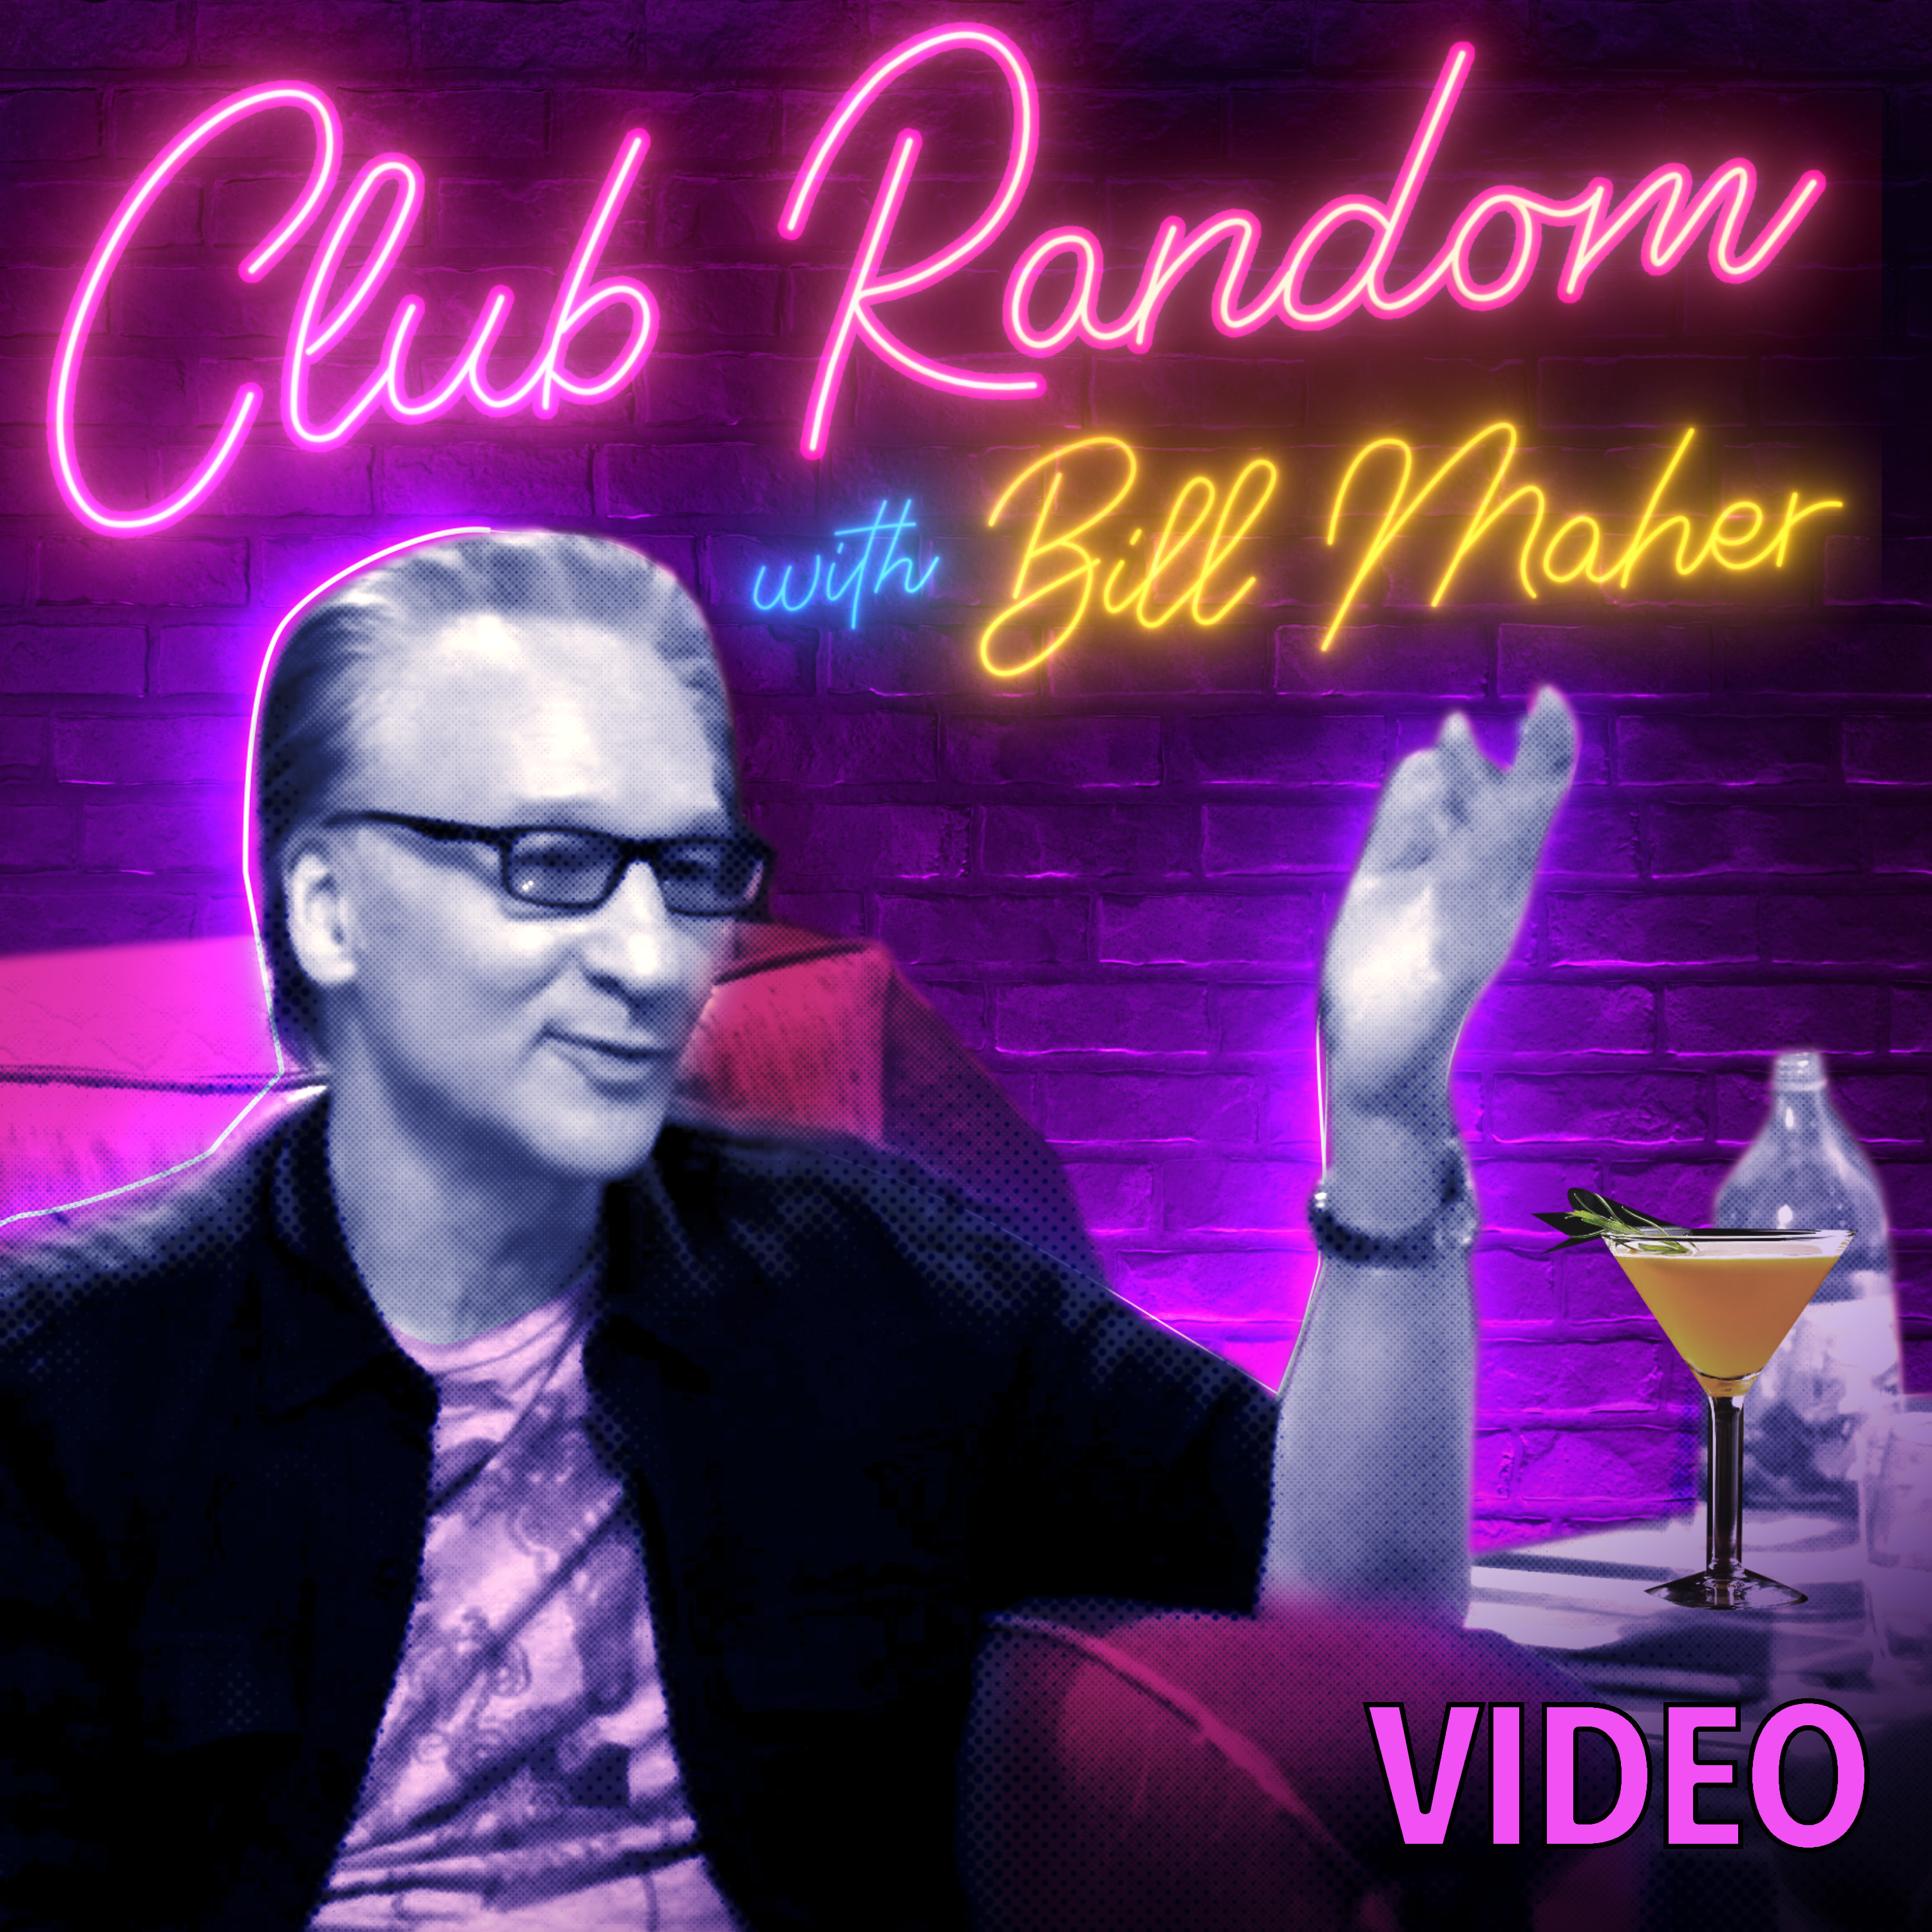 Video: Mayim Bialik |  Club Random with Bill Maher